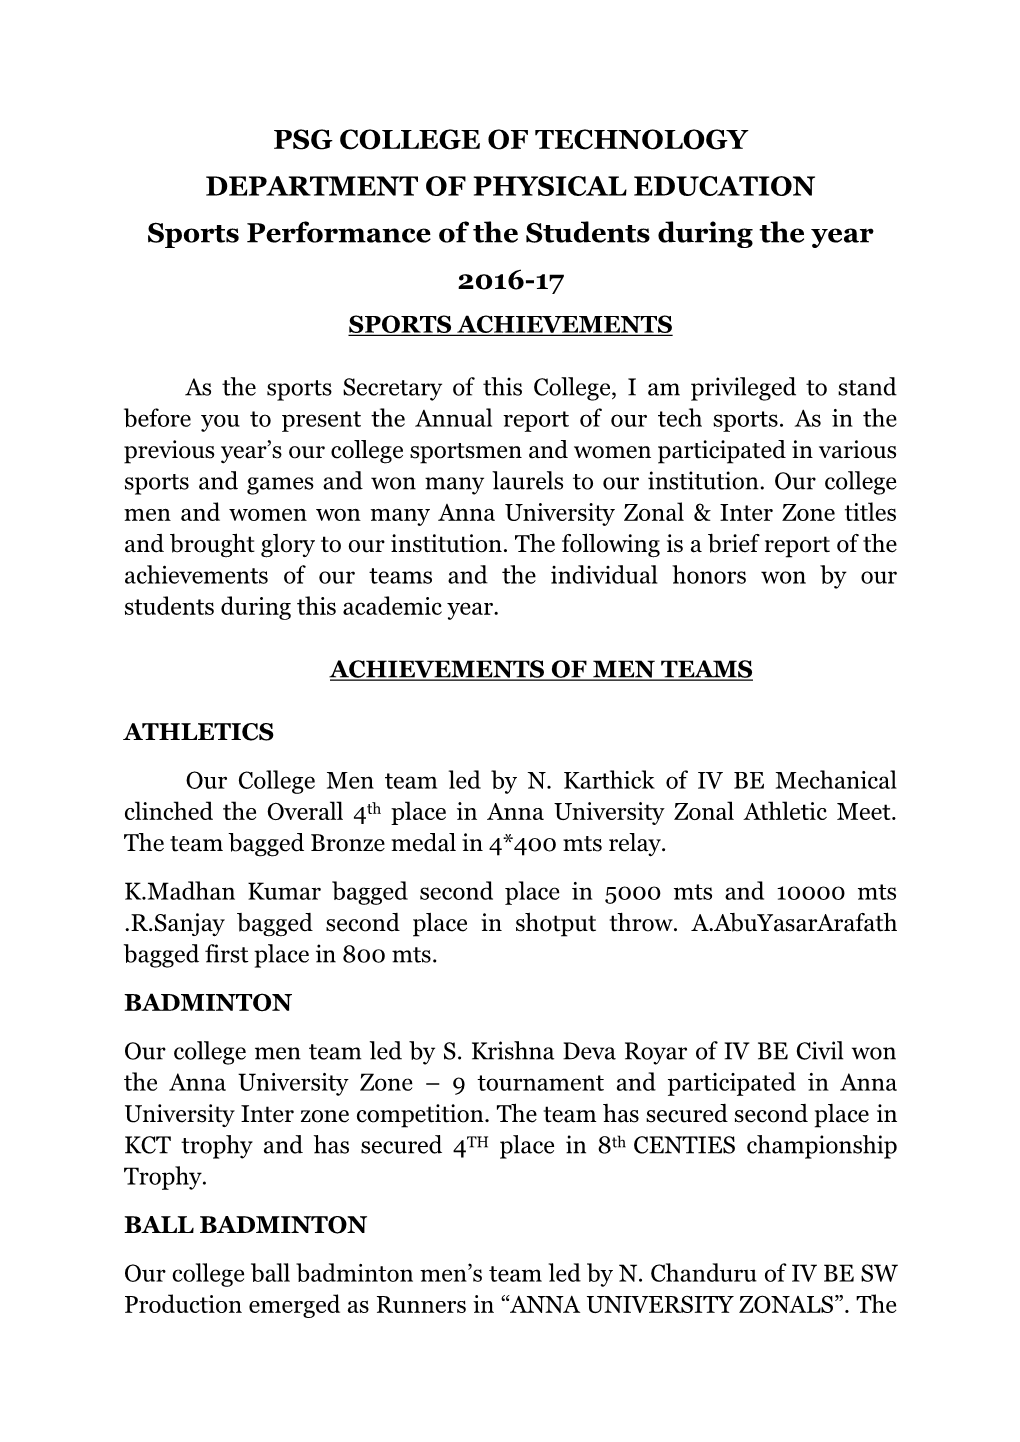 Sports Sports Report 2016-17